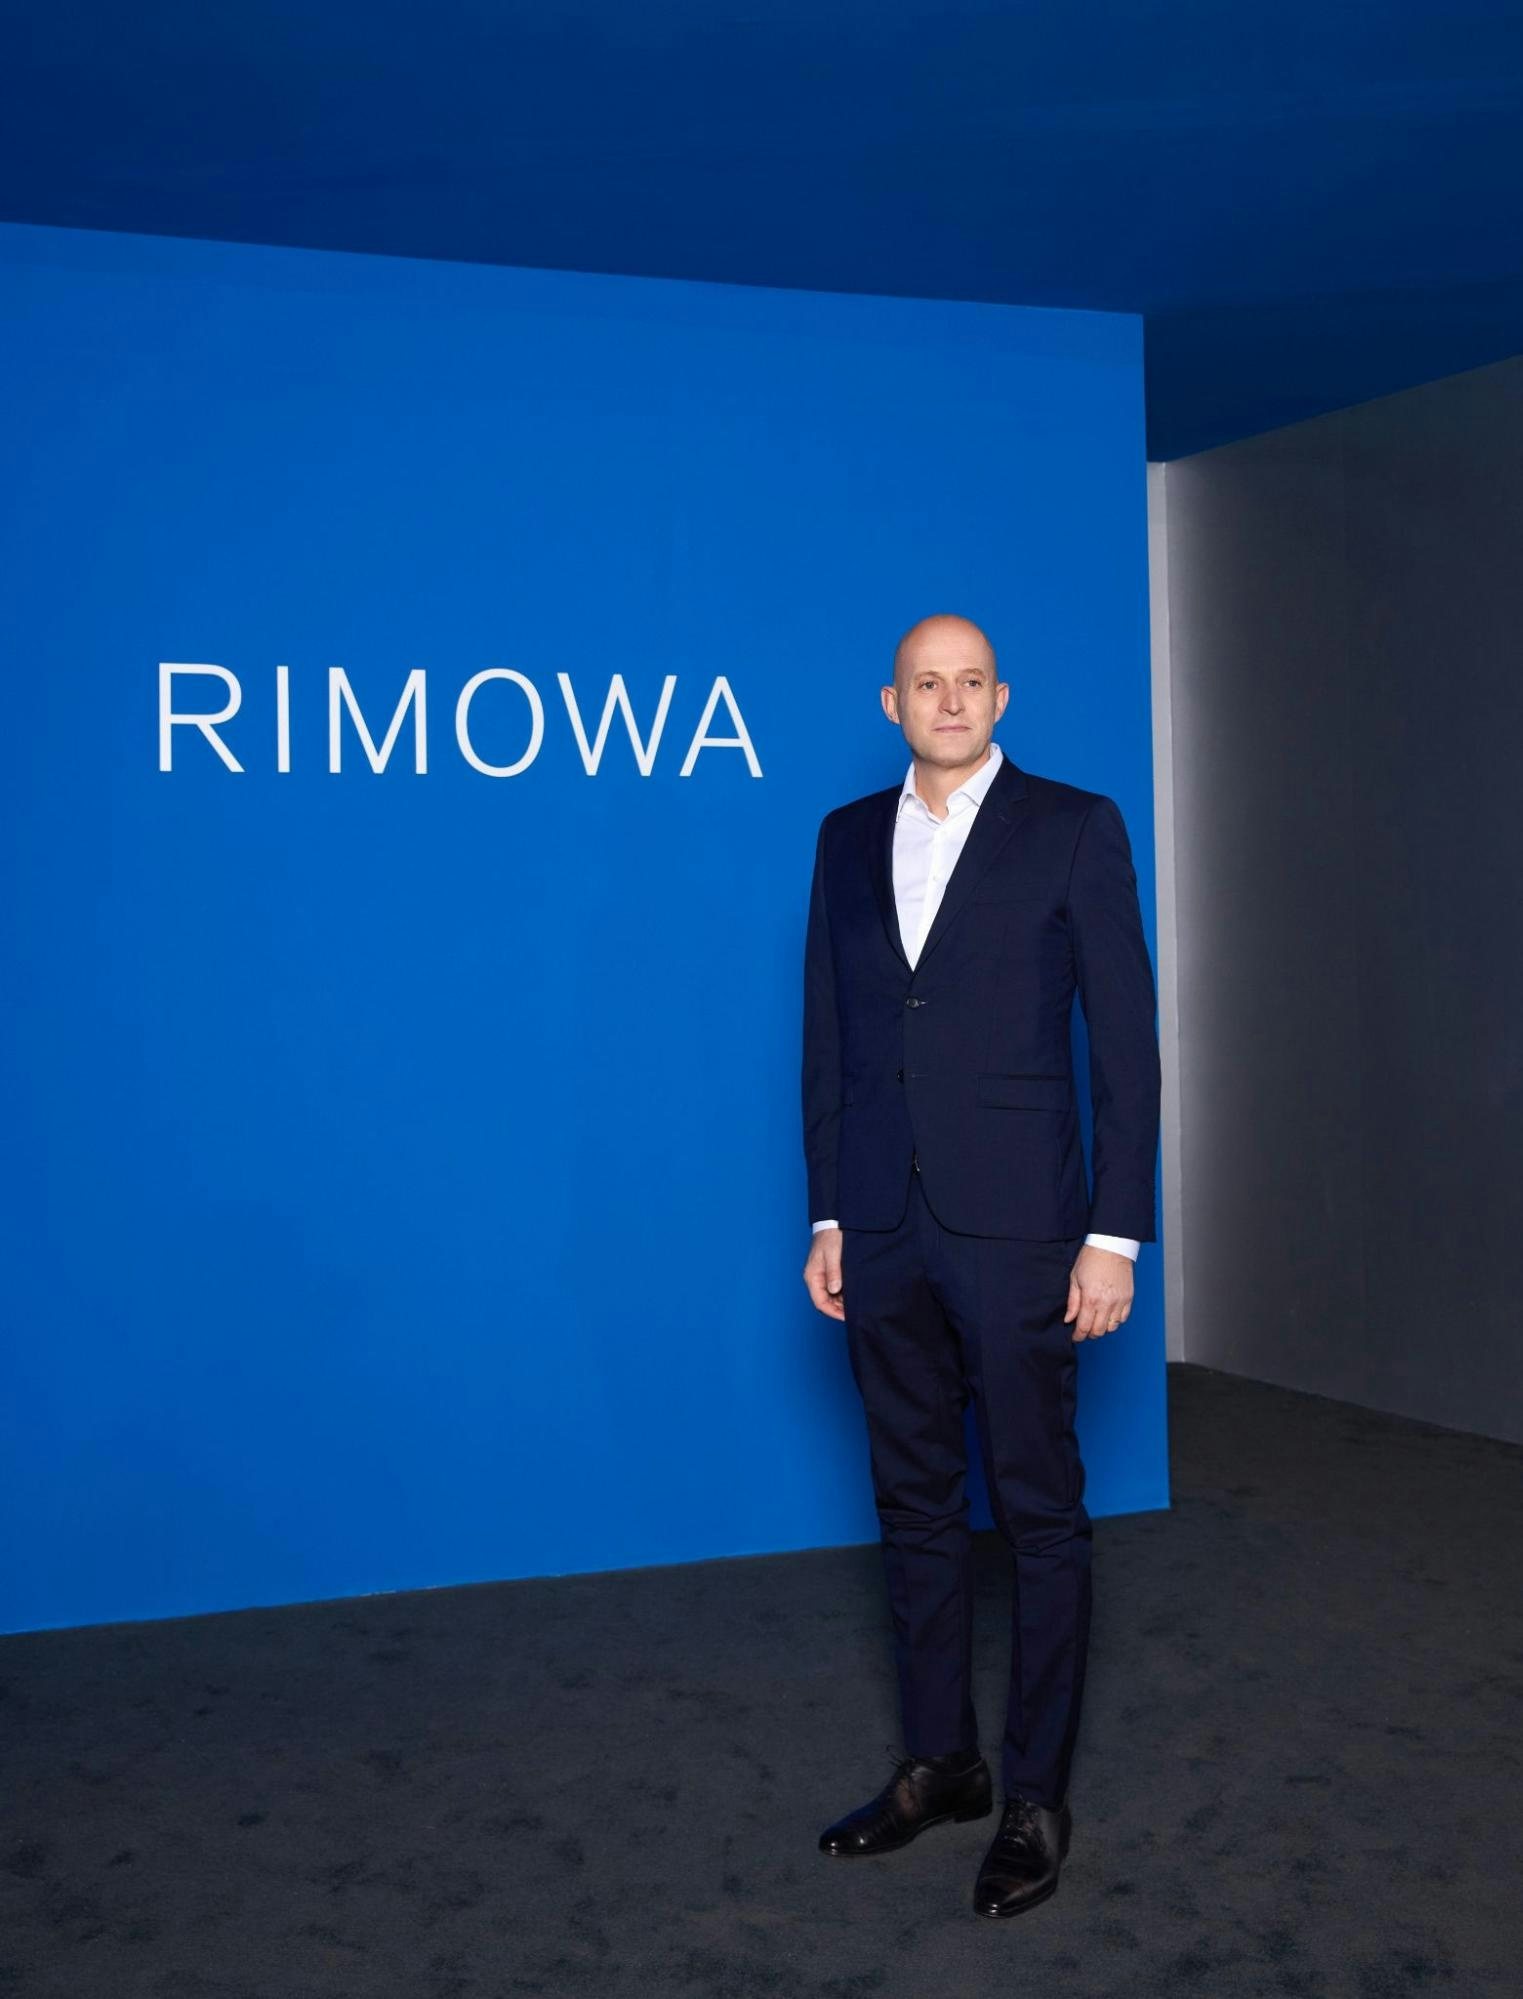 Hugues Bonnet-Masimbert, Rimowa CEO. Photo: Rimowa
